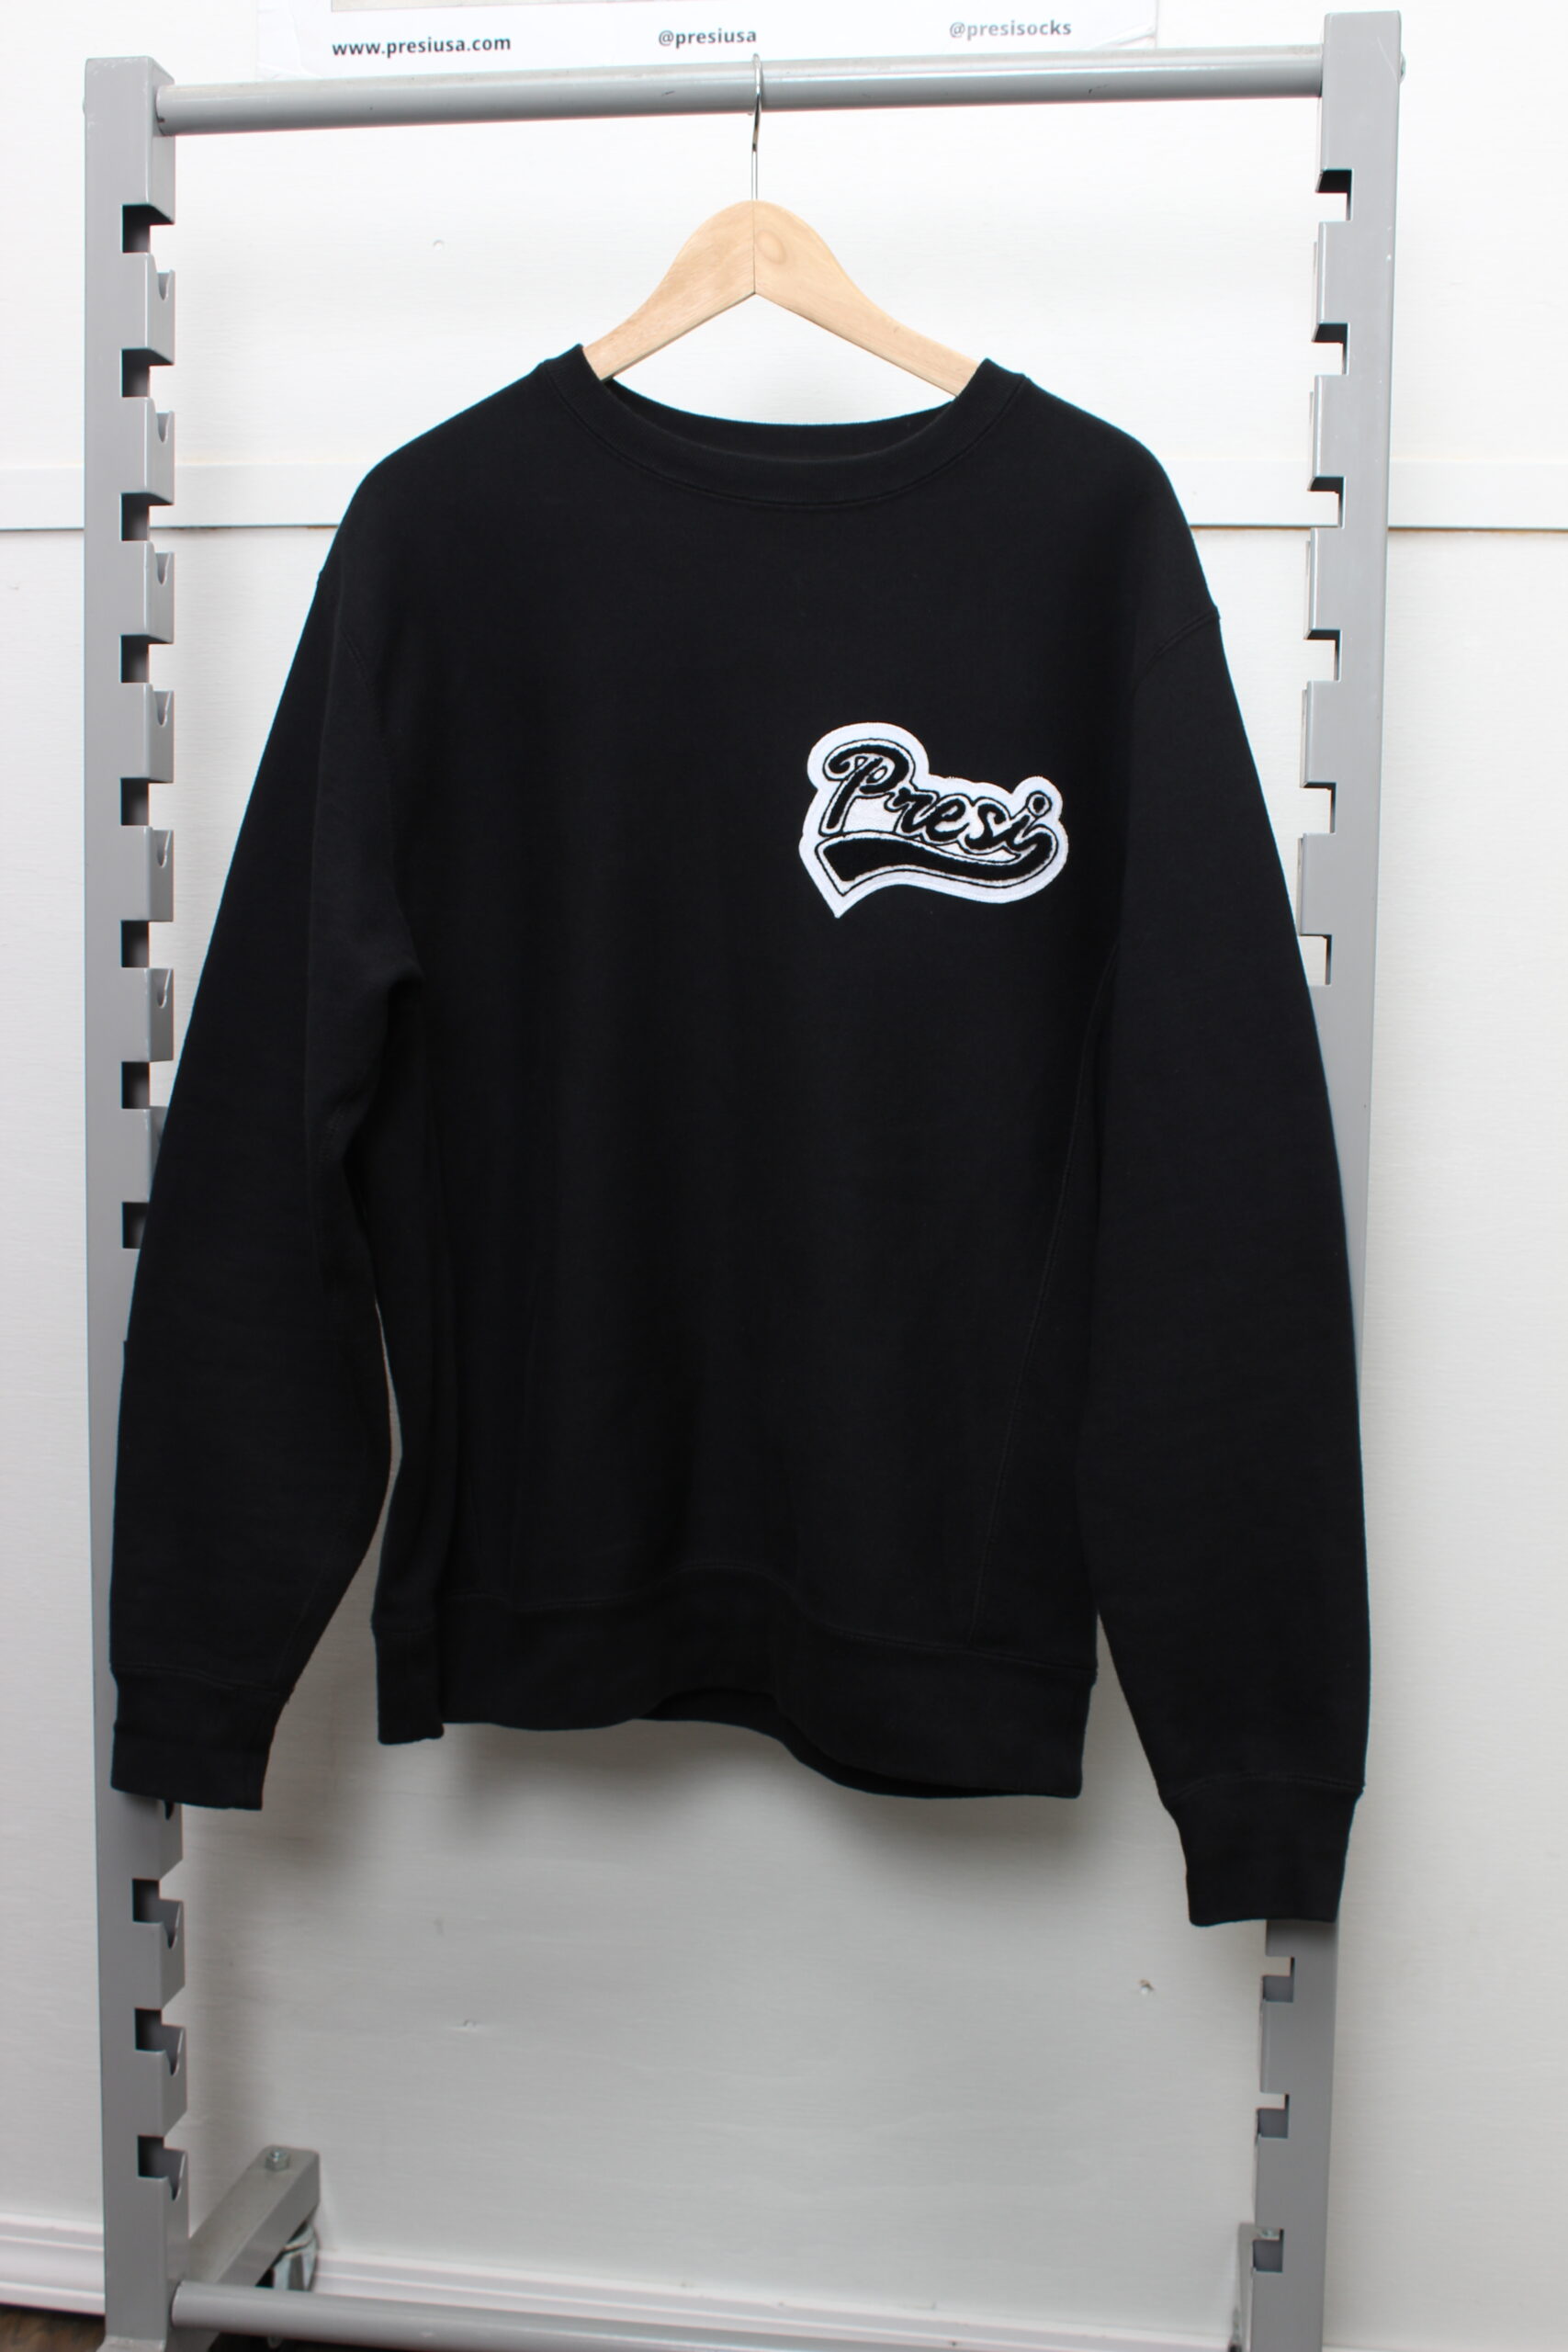 PRESI Chenille Varsity Patch Sweatshirt in Black | PRESI USA